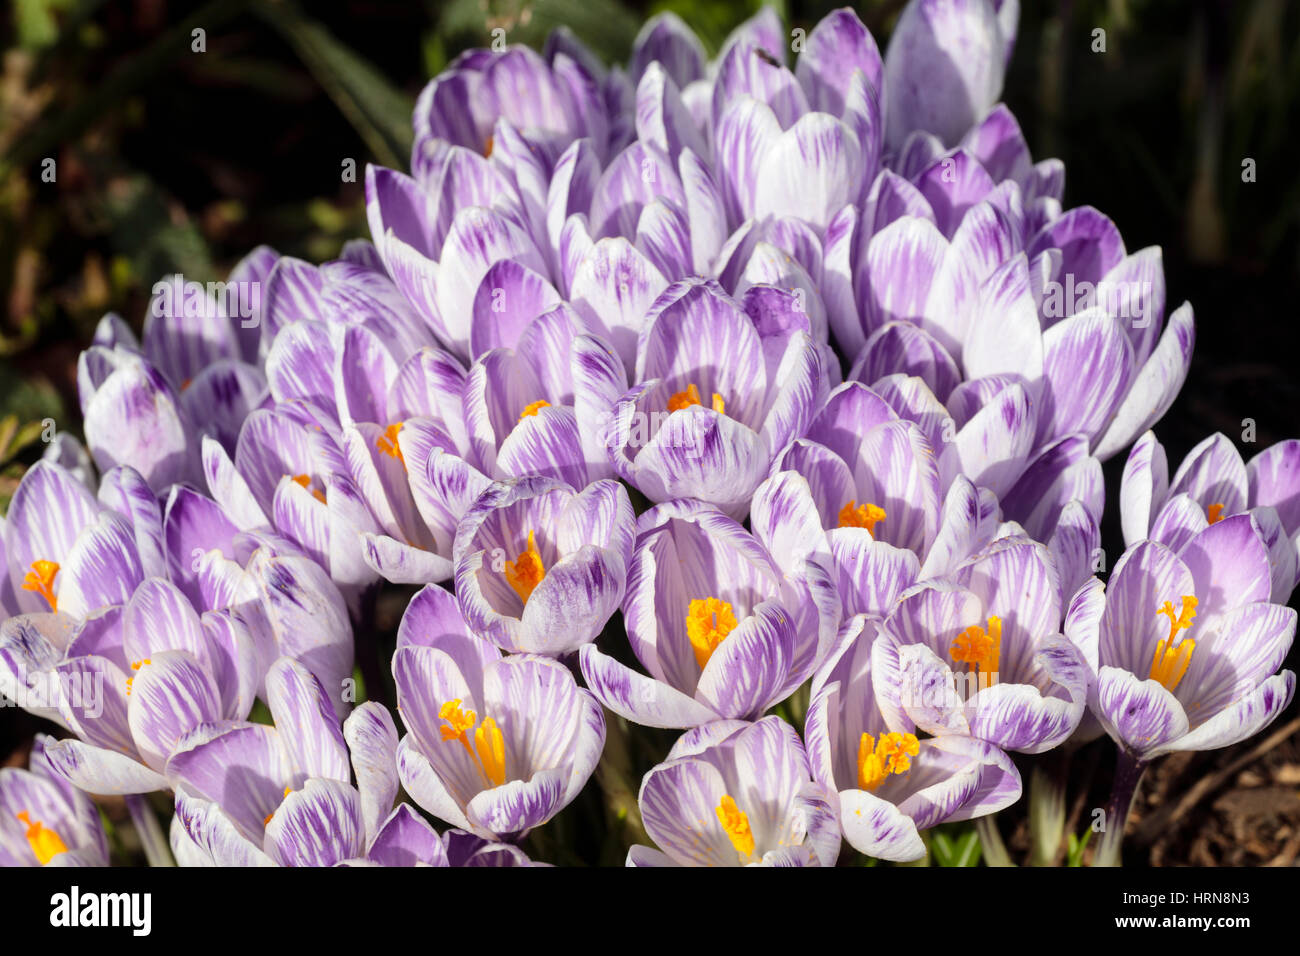 Pale purple striped flowers of the early spring flowering Dutch crocus, Crocus vernus 'Pickwick' Stock Photo